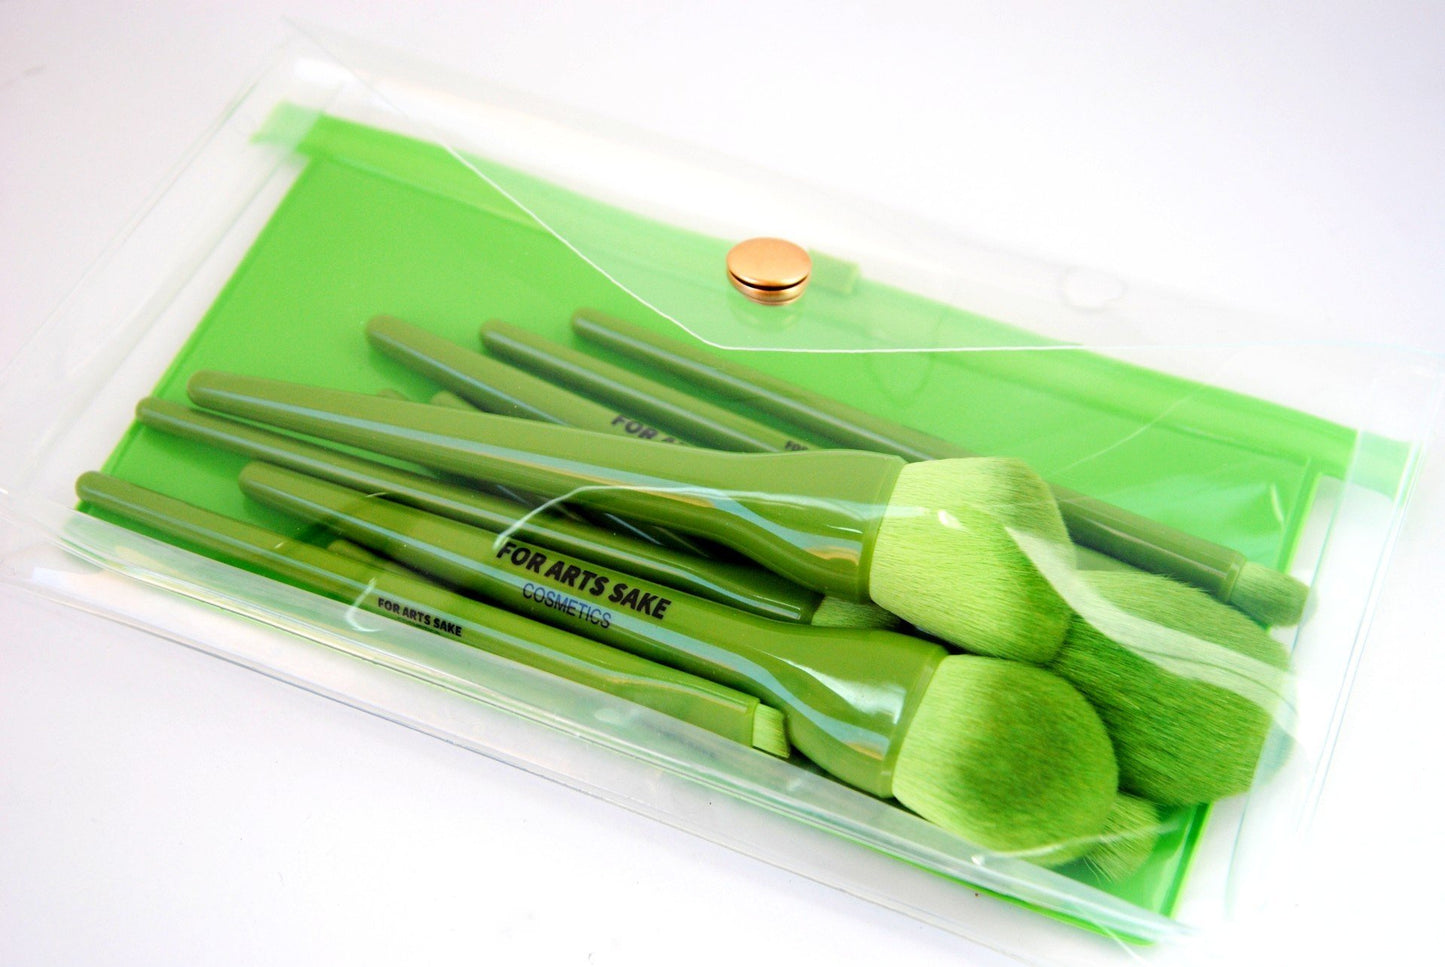 10 Piece Makeup Brush Set | Green - For Arts Sake Cosmetics